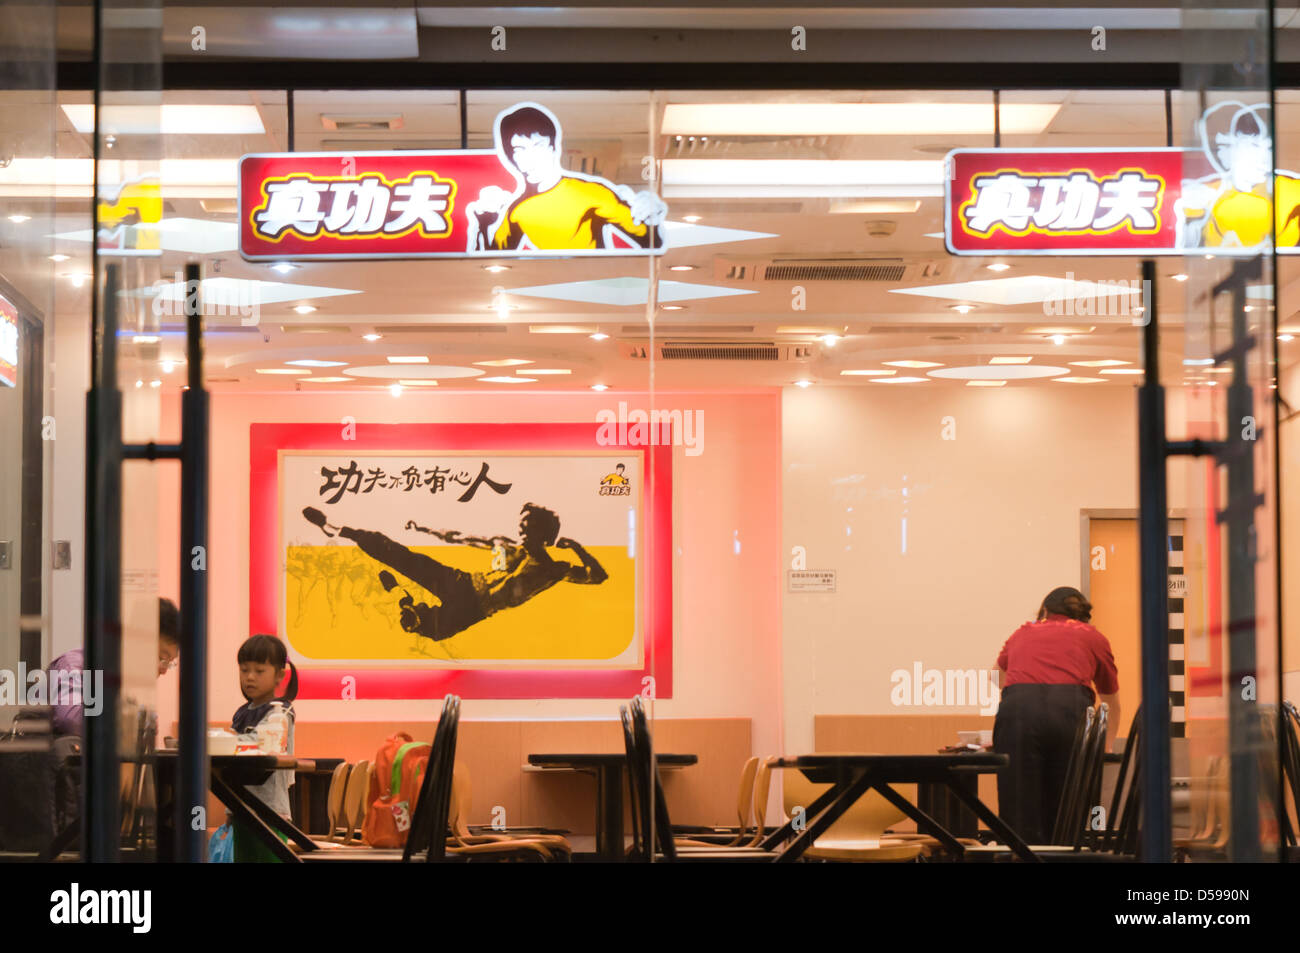 Steam kung fu restaurant chain in China Stock Photo